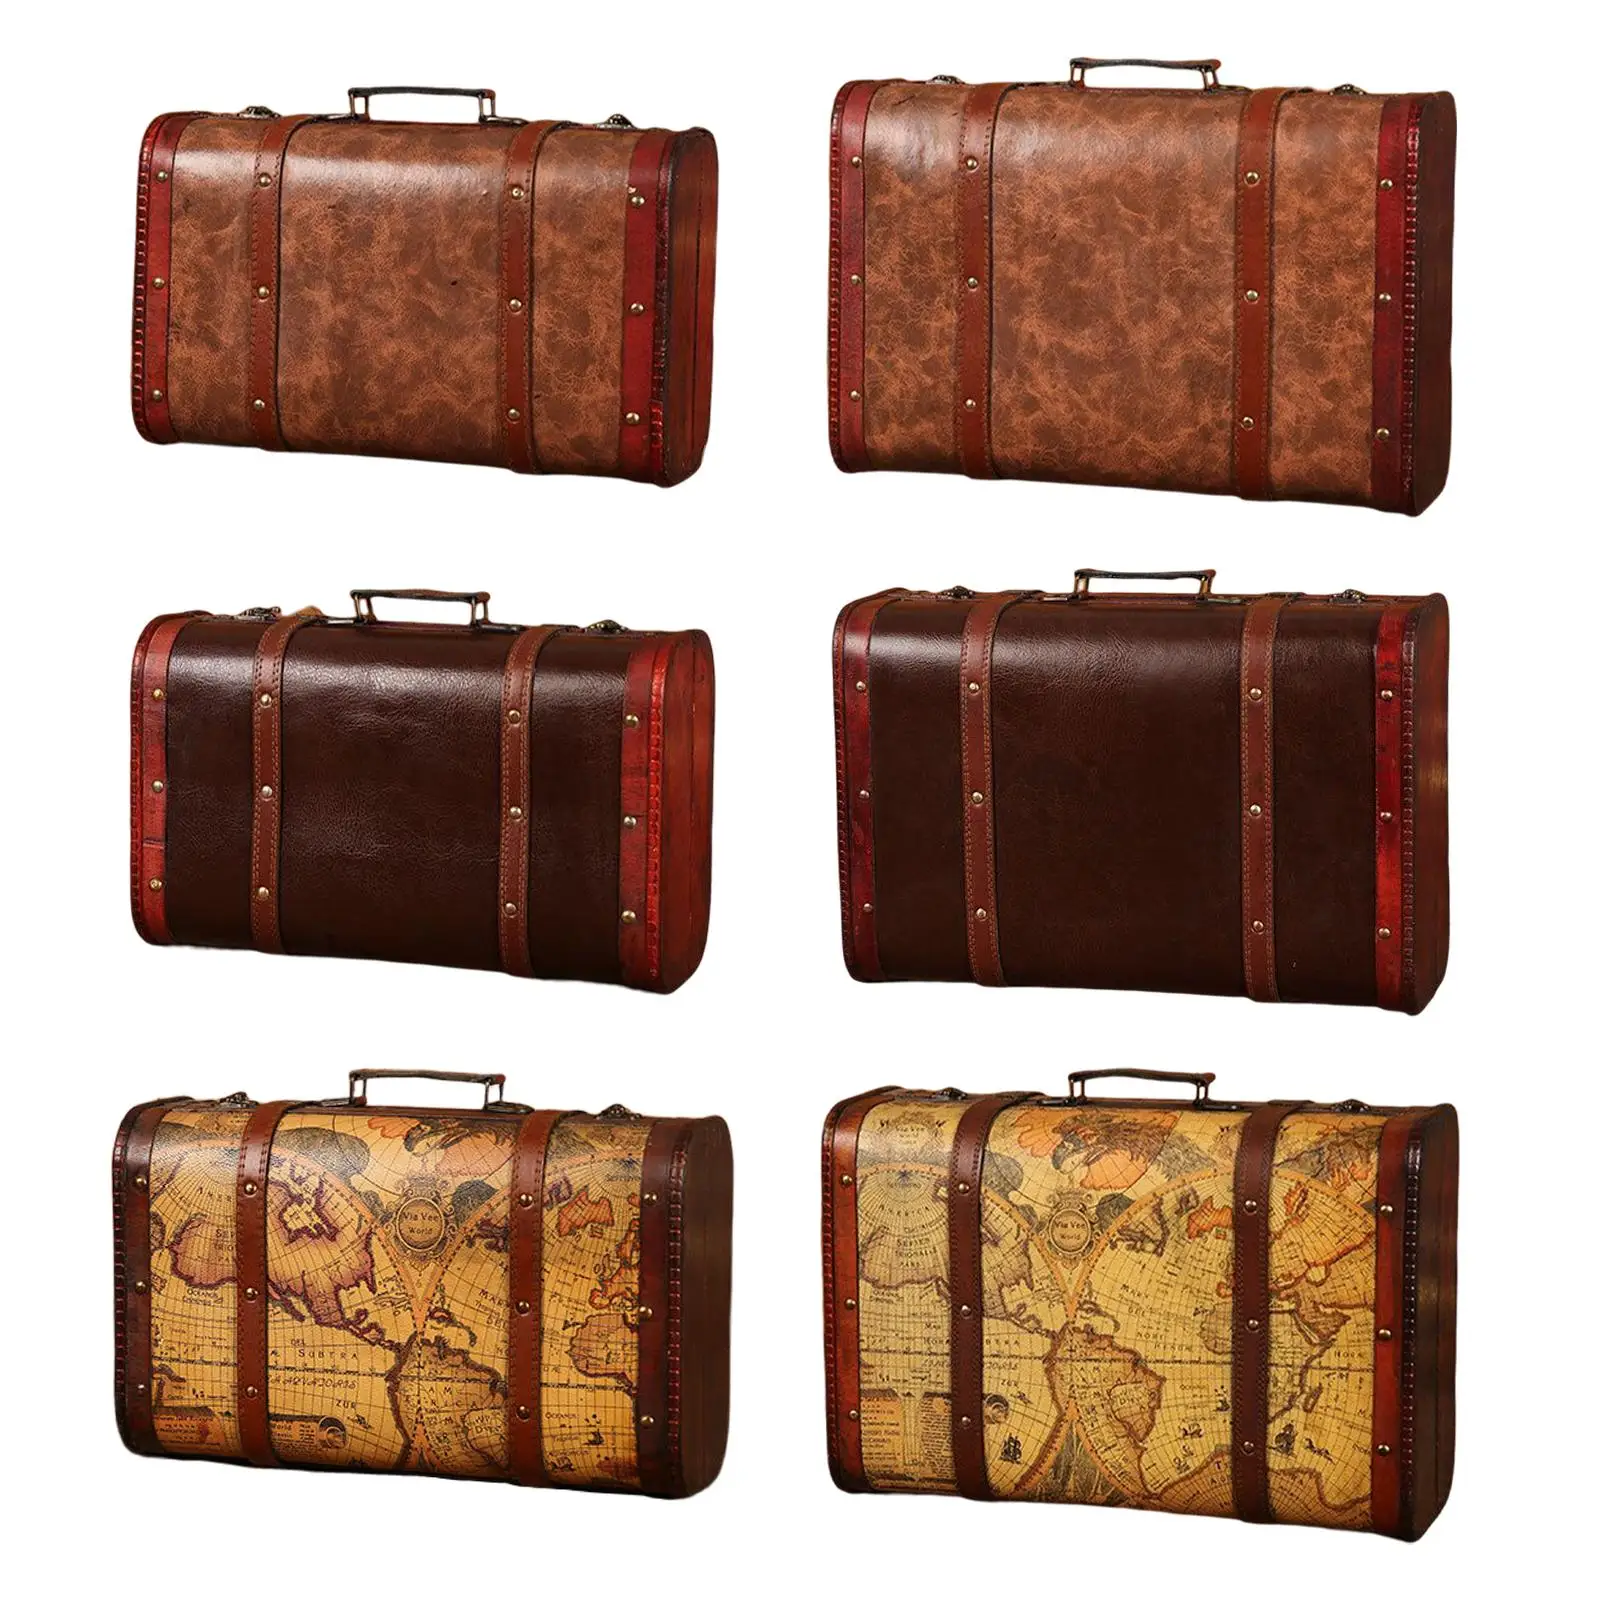 Vintage Suitcase Antique Suitcases Ornaments Collection Photo Props Decorative Box Suitcase Wood Chest for Shop Window Bedroom